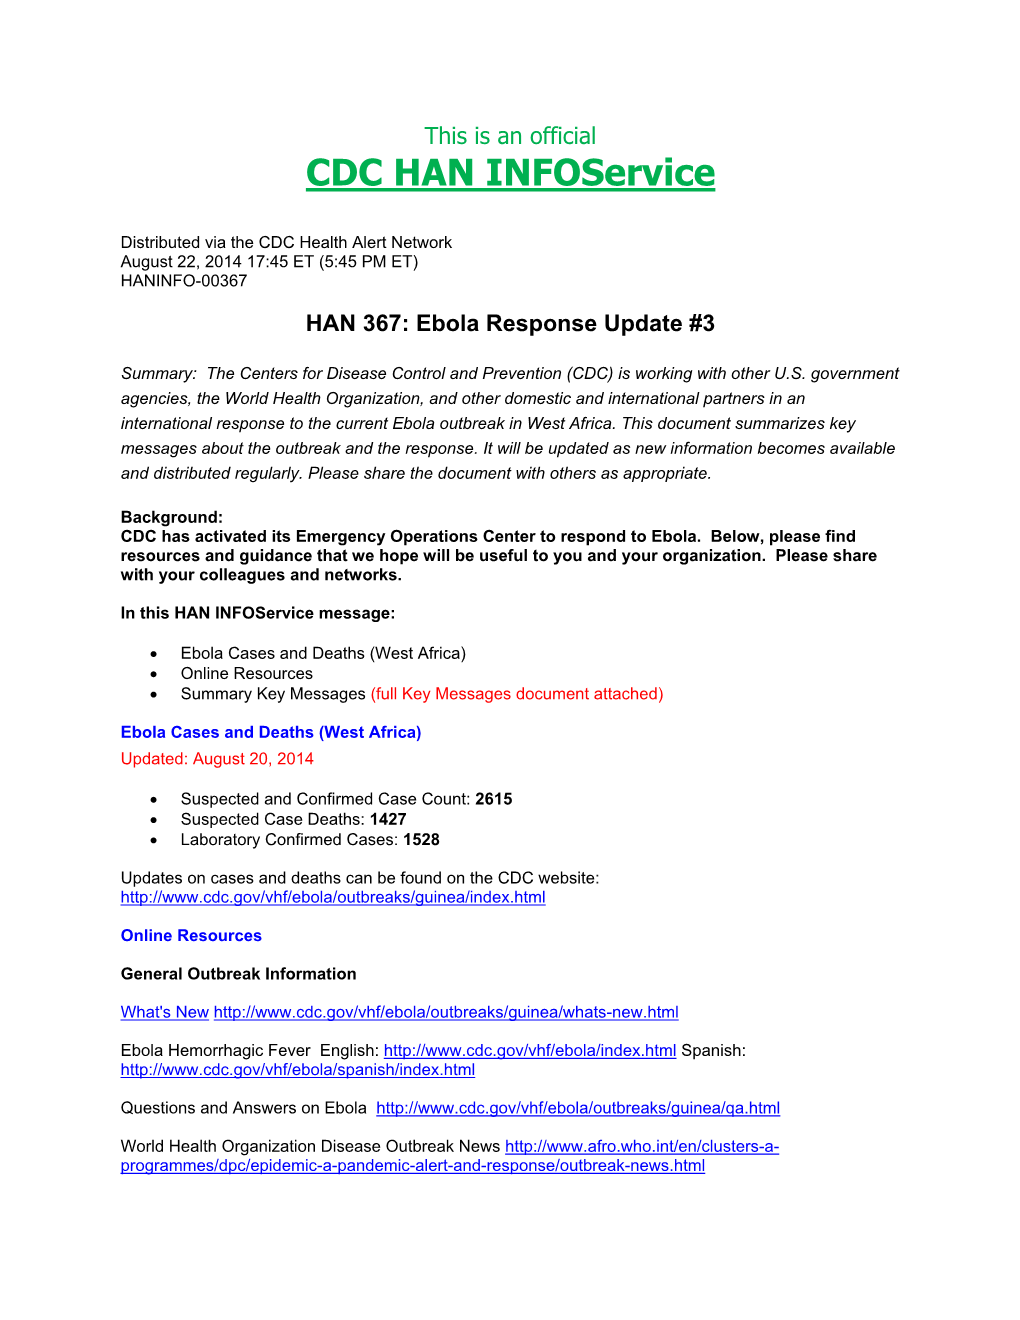 CDC HAN Infoservice